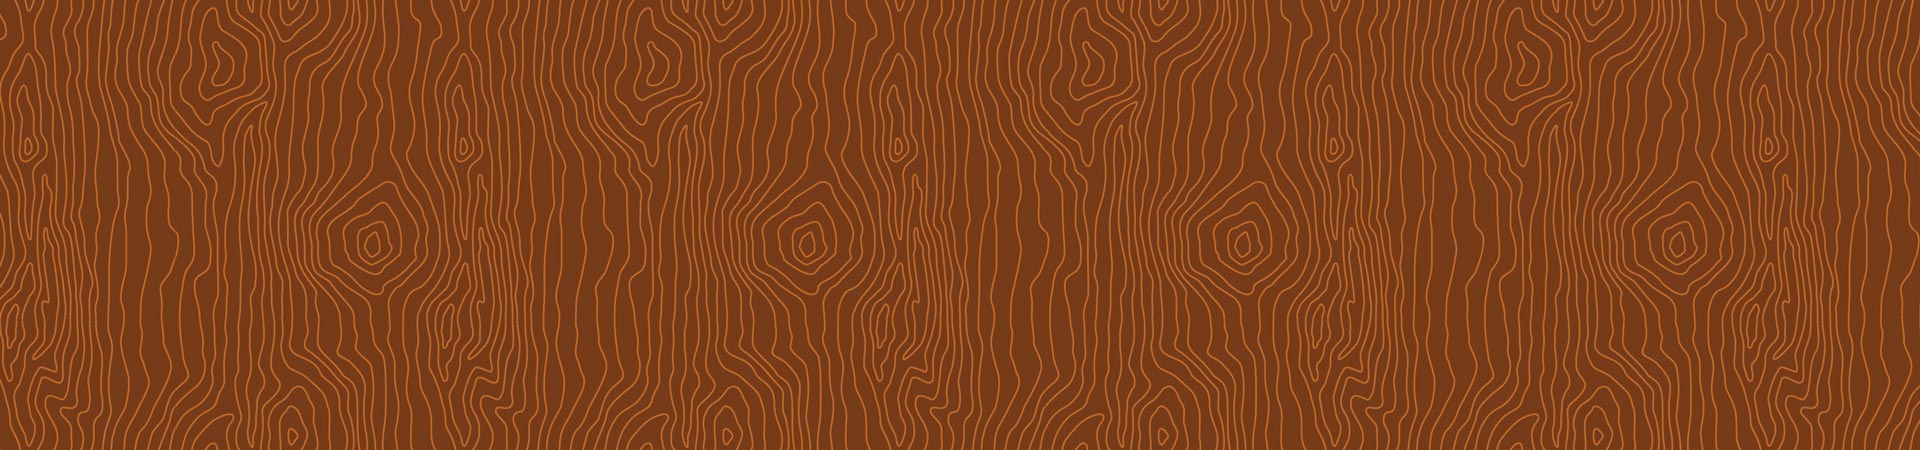  An decorative, illustrated wood grain pattern. 